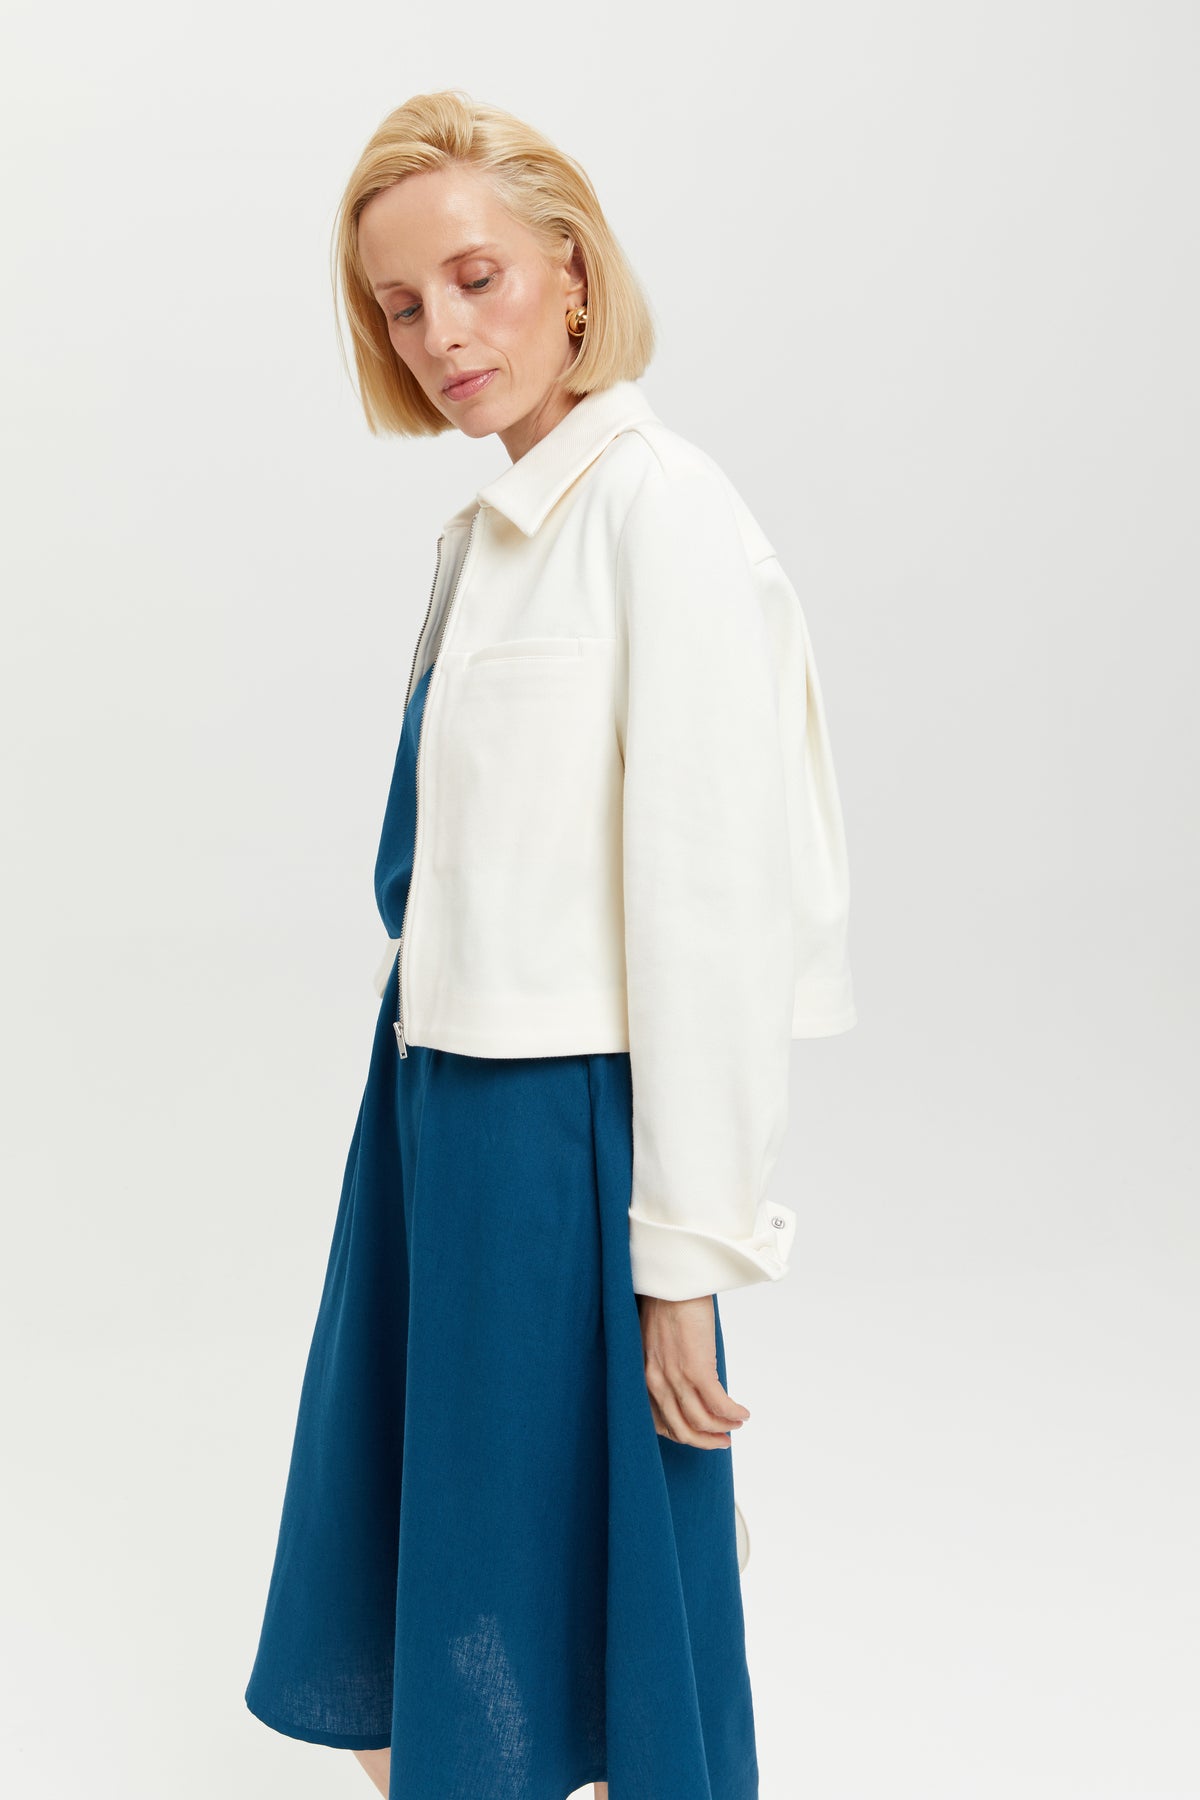 Nane | Linen Dress with Short Sleeves in Petrol-Blue